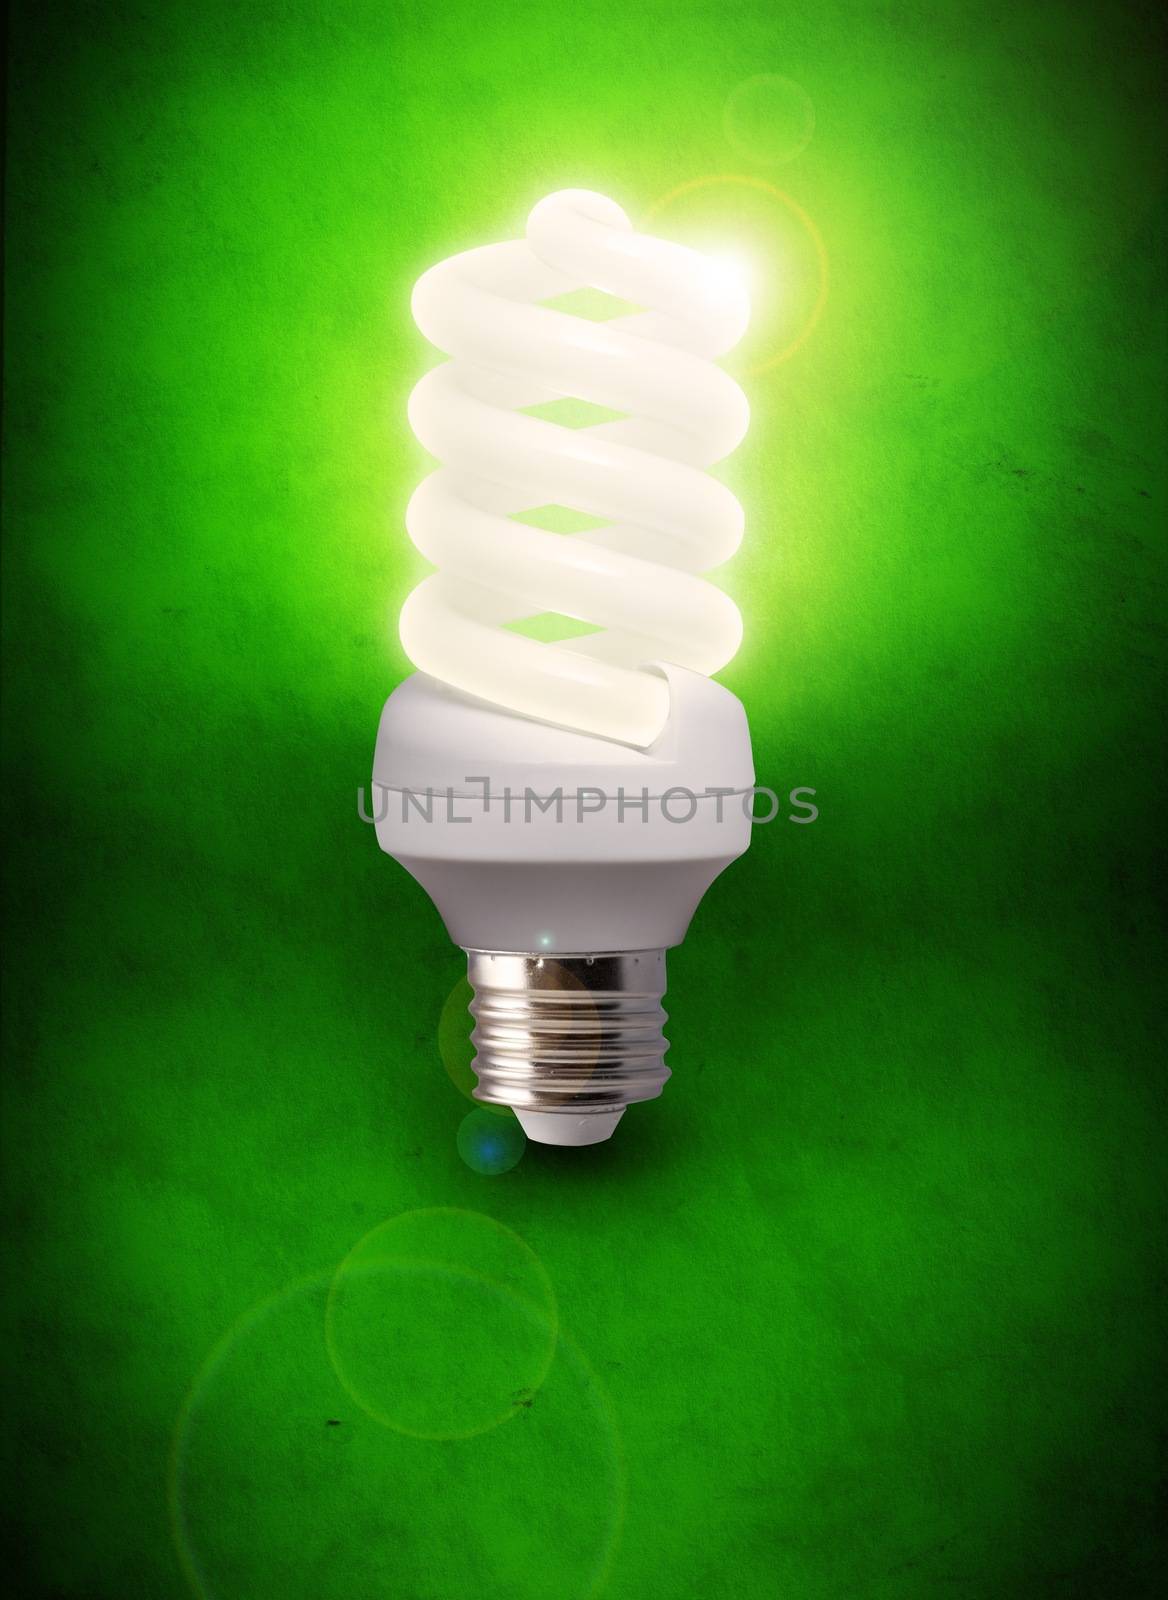 Eco-save bulb by Onigiristudio